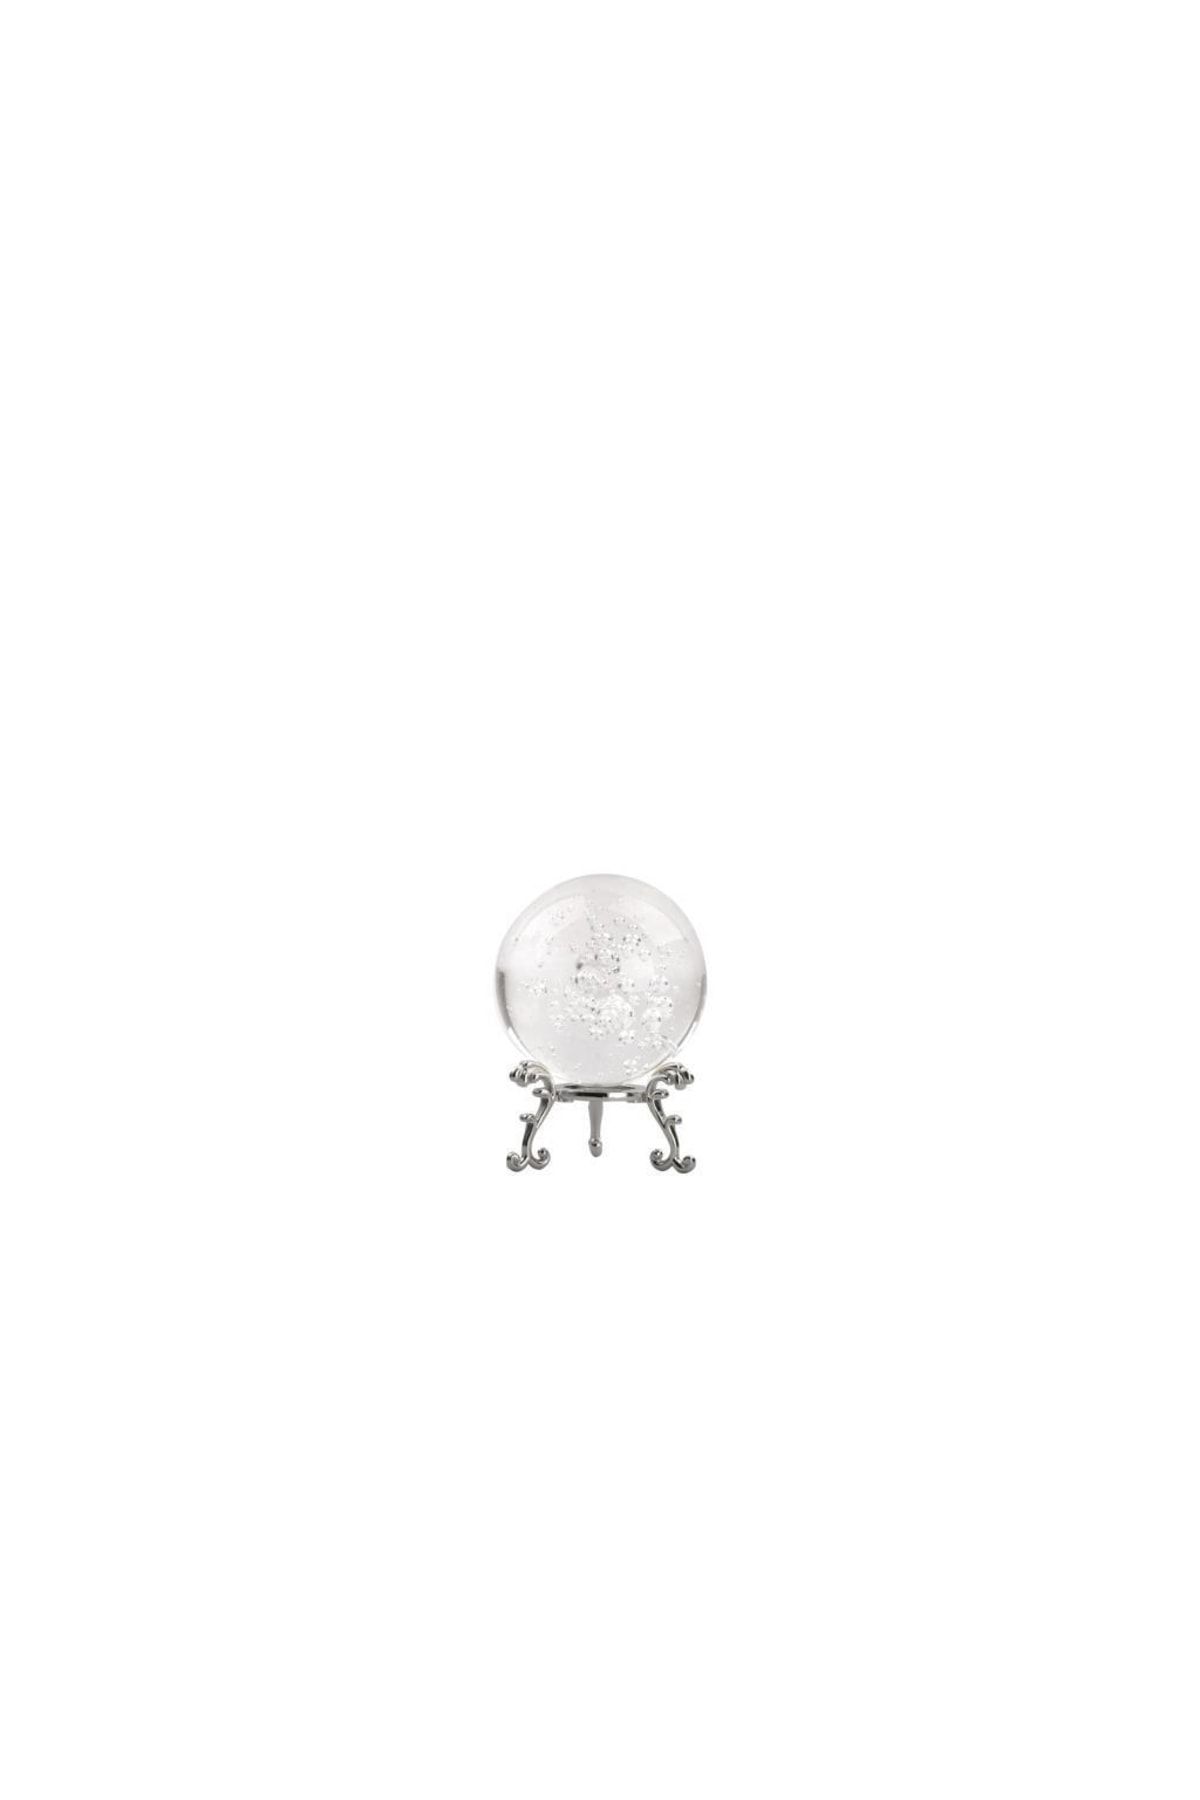 AROW Gümüş Baloncuklu Küre 8x6cm